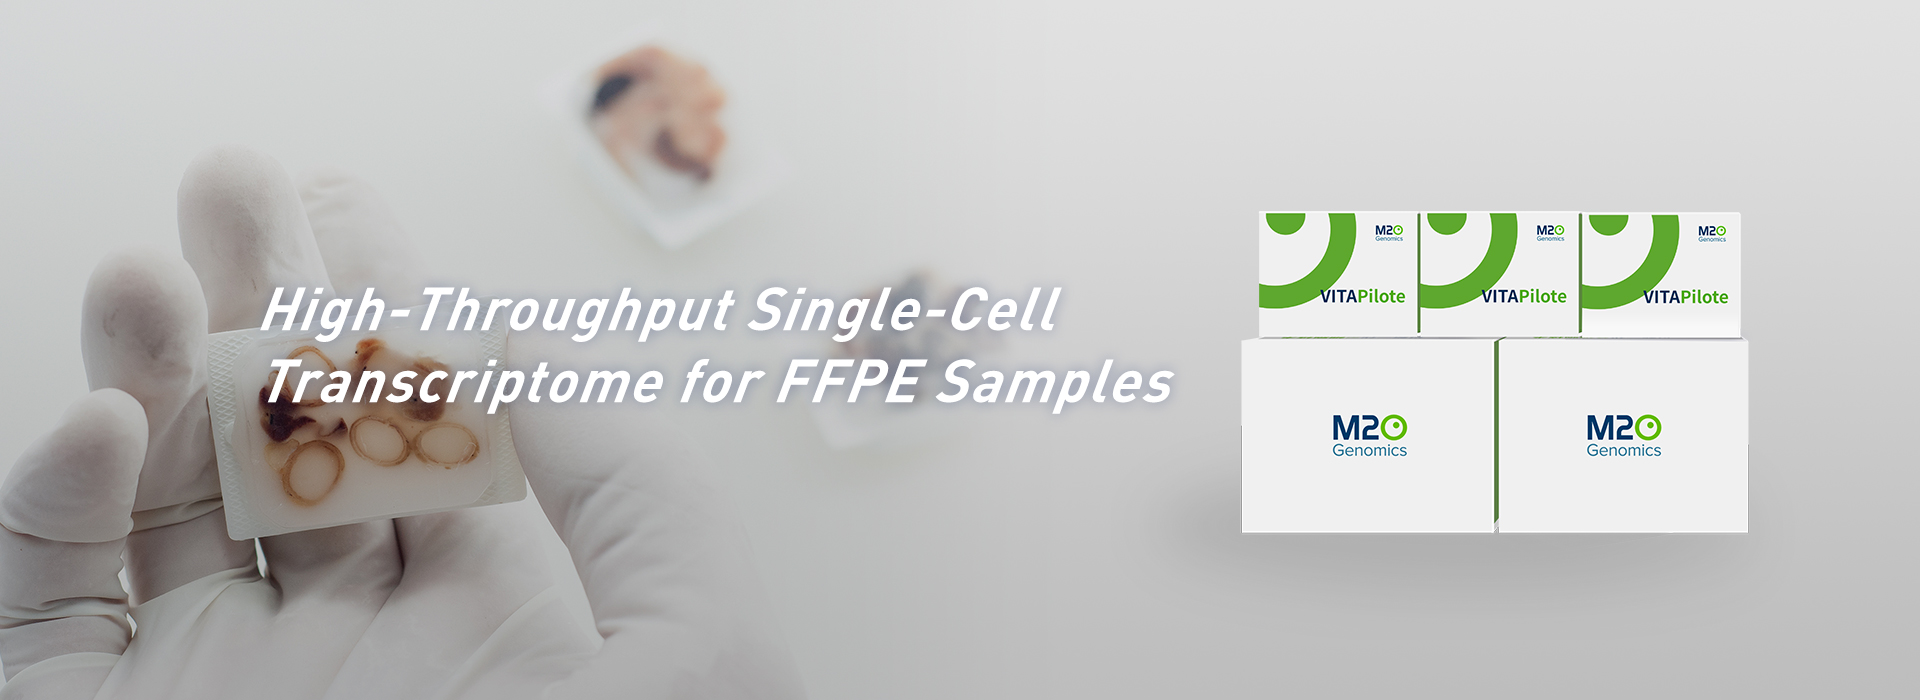 Single-Cell Transcriptome for FFPE Samples